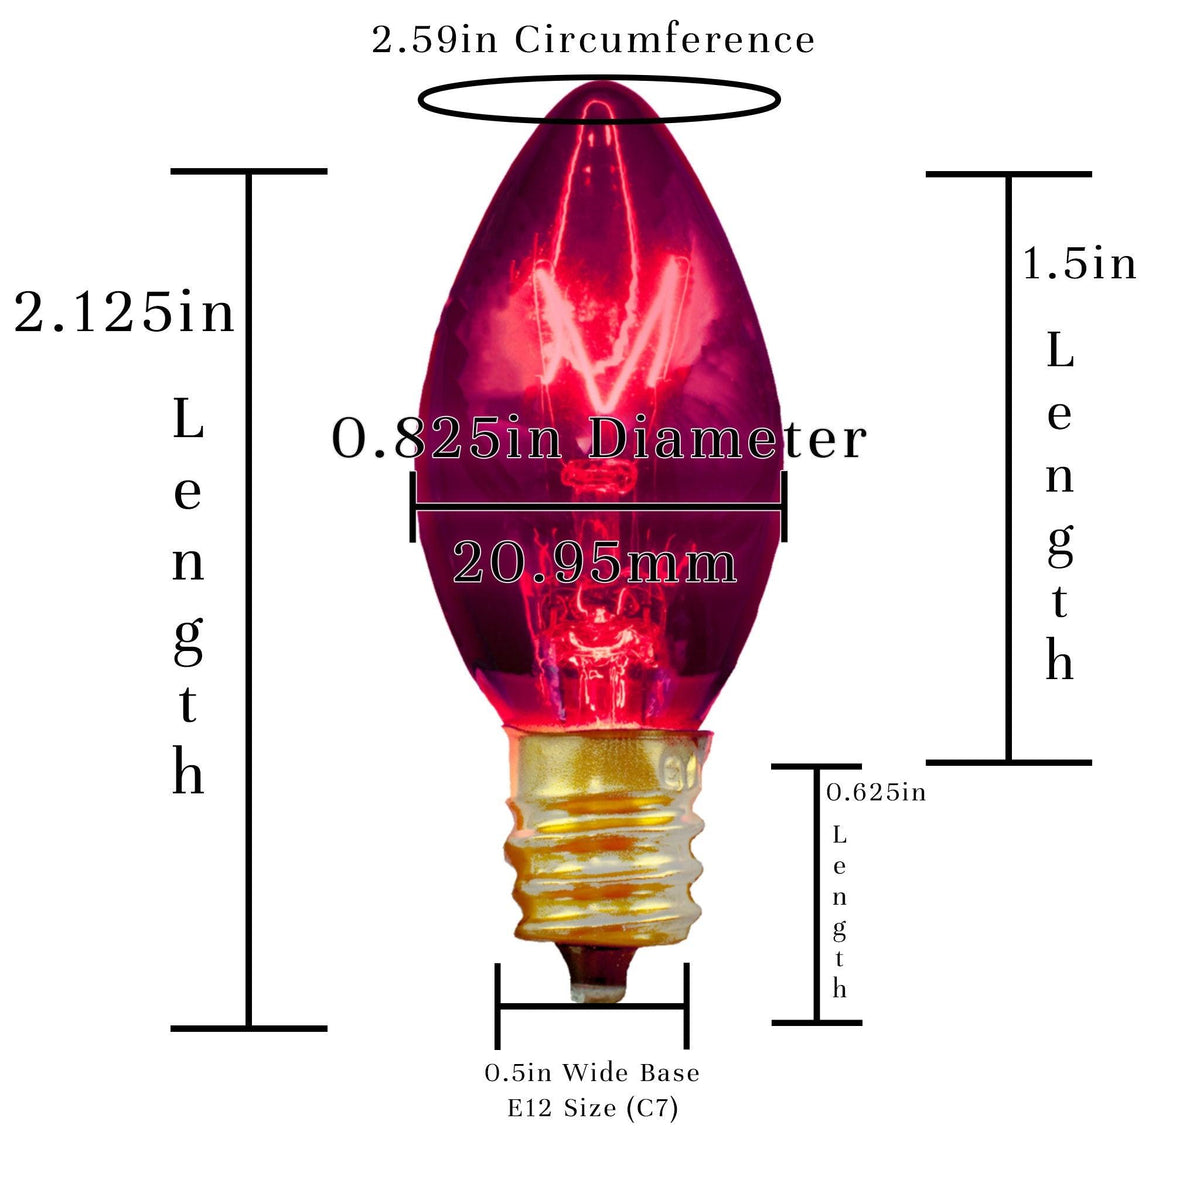 Size of a C7 Purple Light Bulb sold from leedisplay.com